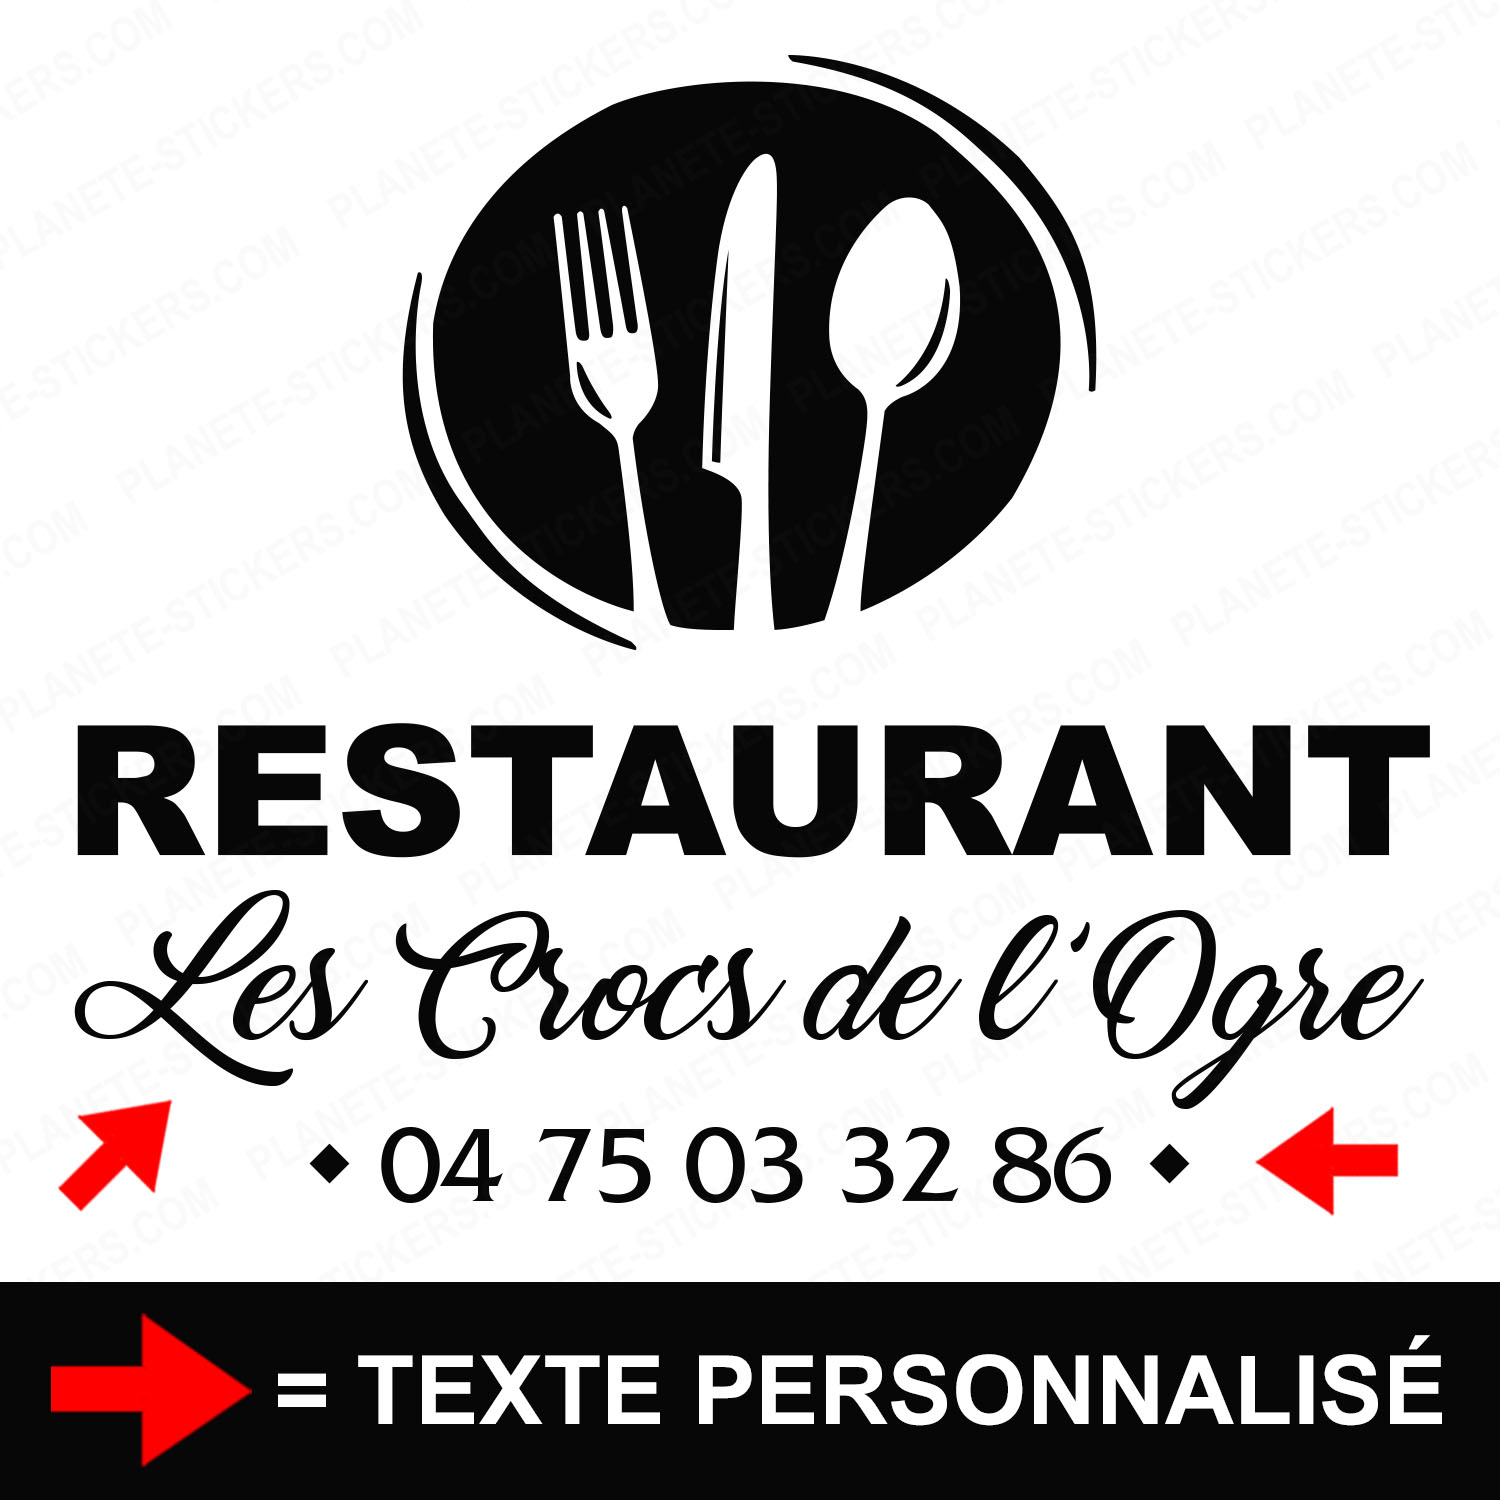 ref3restaurantvitrine-stickers-restaurant-vitrine-restaurant-sticker-personnalisé-autocollant-pro-restaurateur-vitre-resto-professionnel-logo-couverts-2